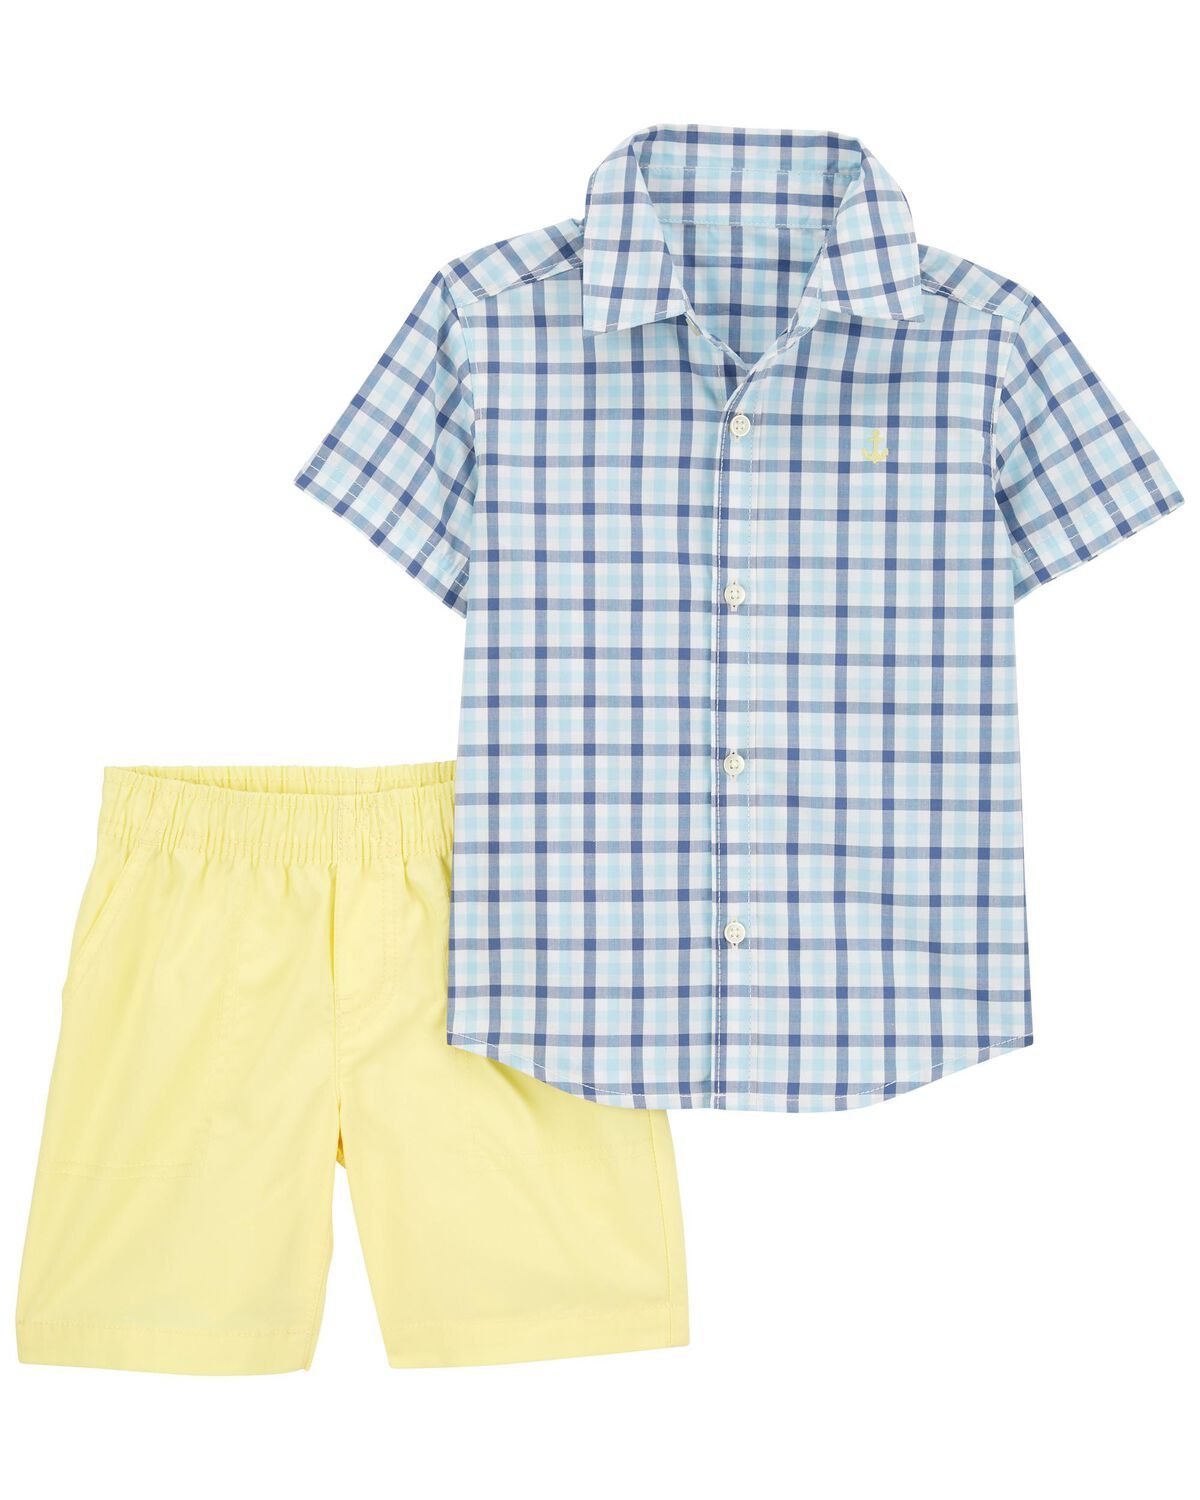 Blue/Yellow Toddler 2-Piece Plaid Button-Down Shirt & Short Set | carters.com | Carter's